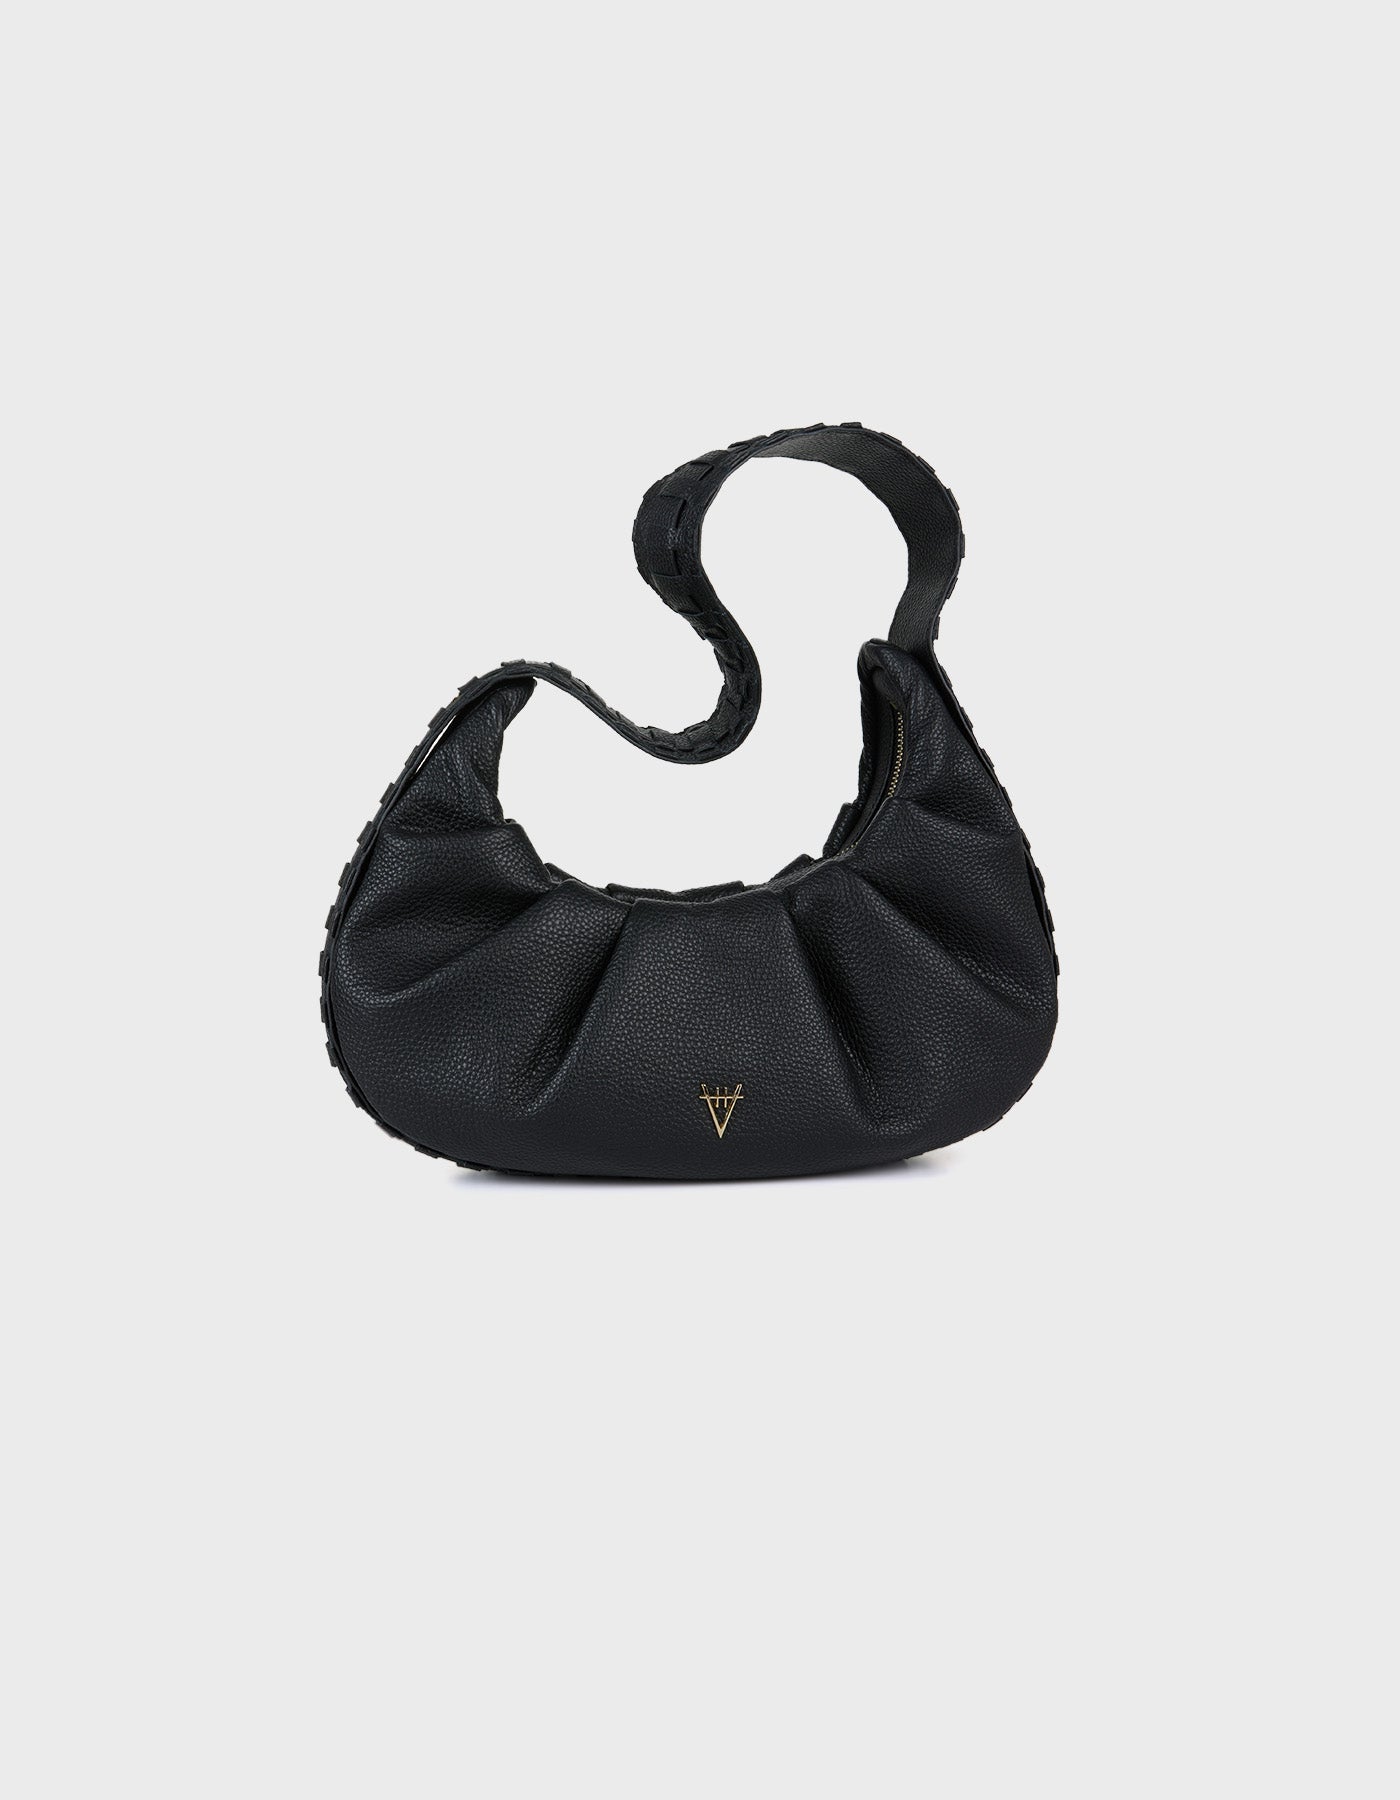 HiVa Atelier | Croissant Bag Black | Beautiful and Versatile